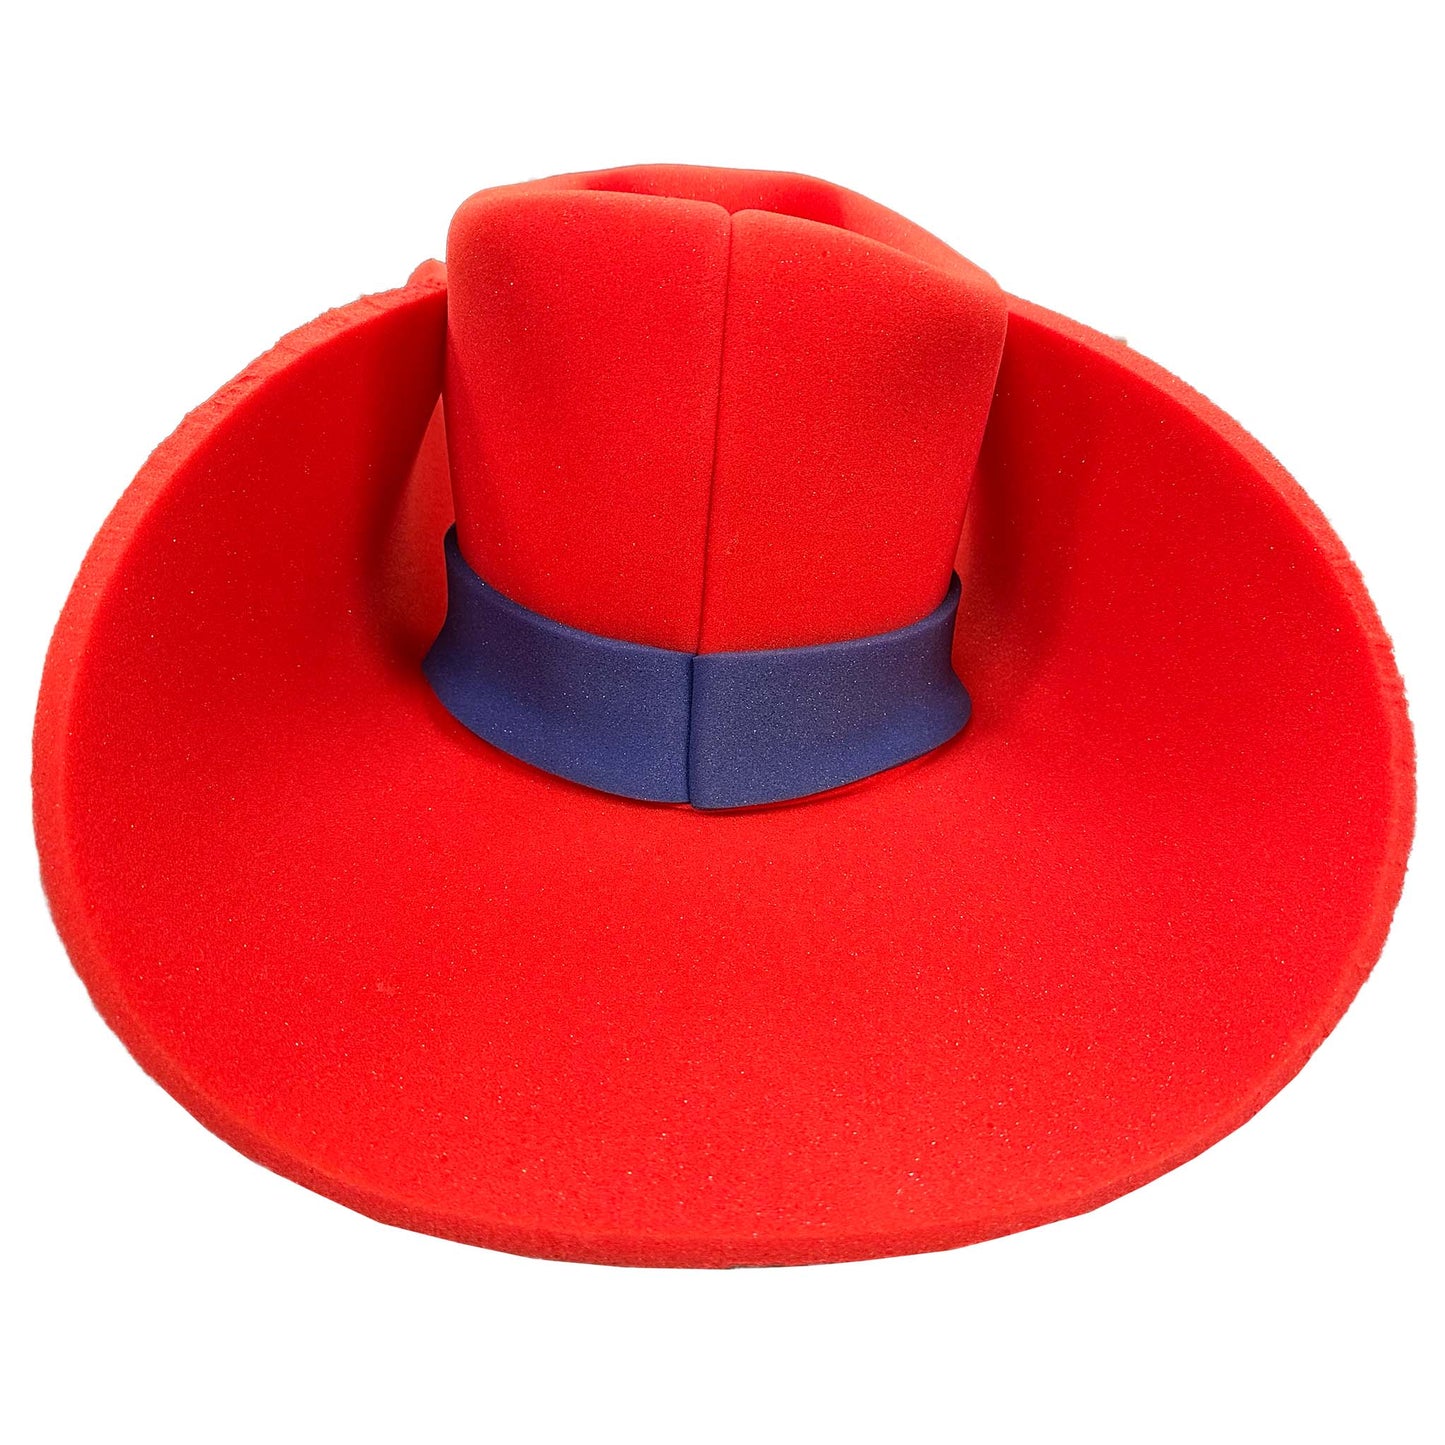 Novelty Foam Cowboy Hats